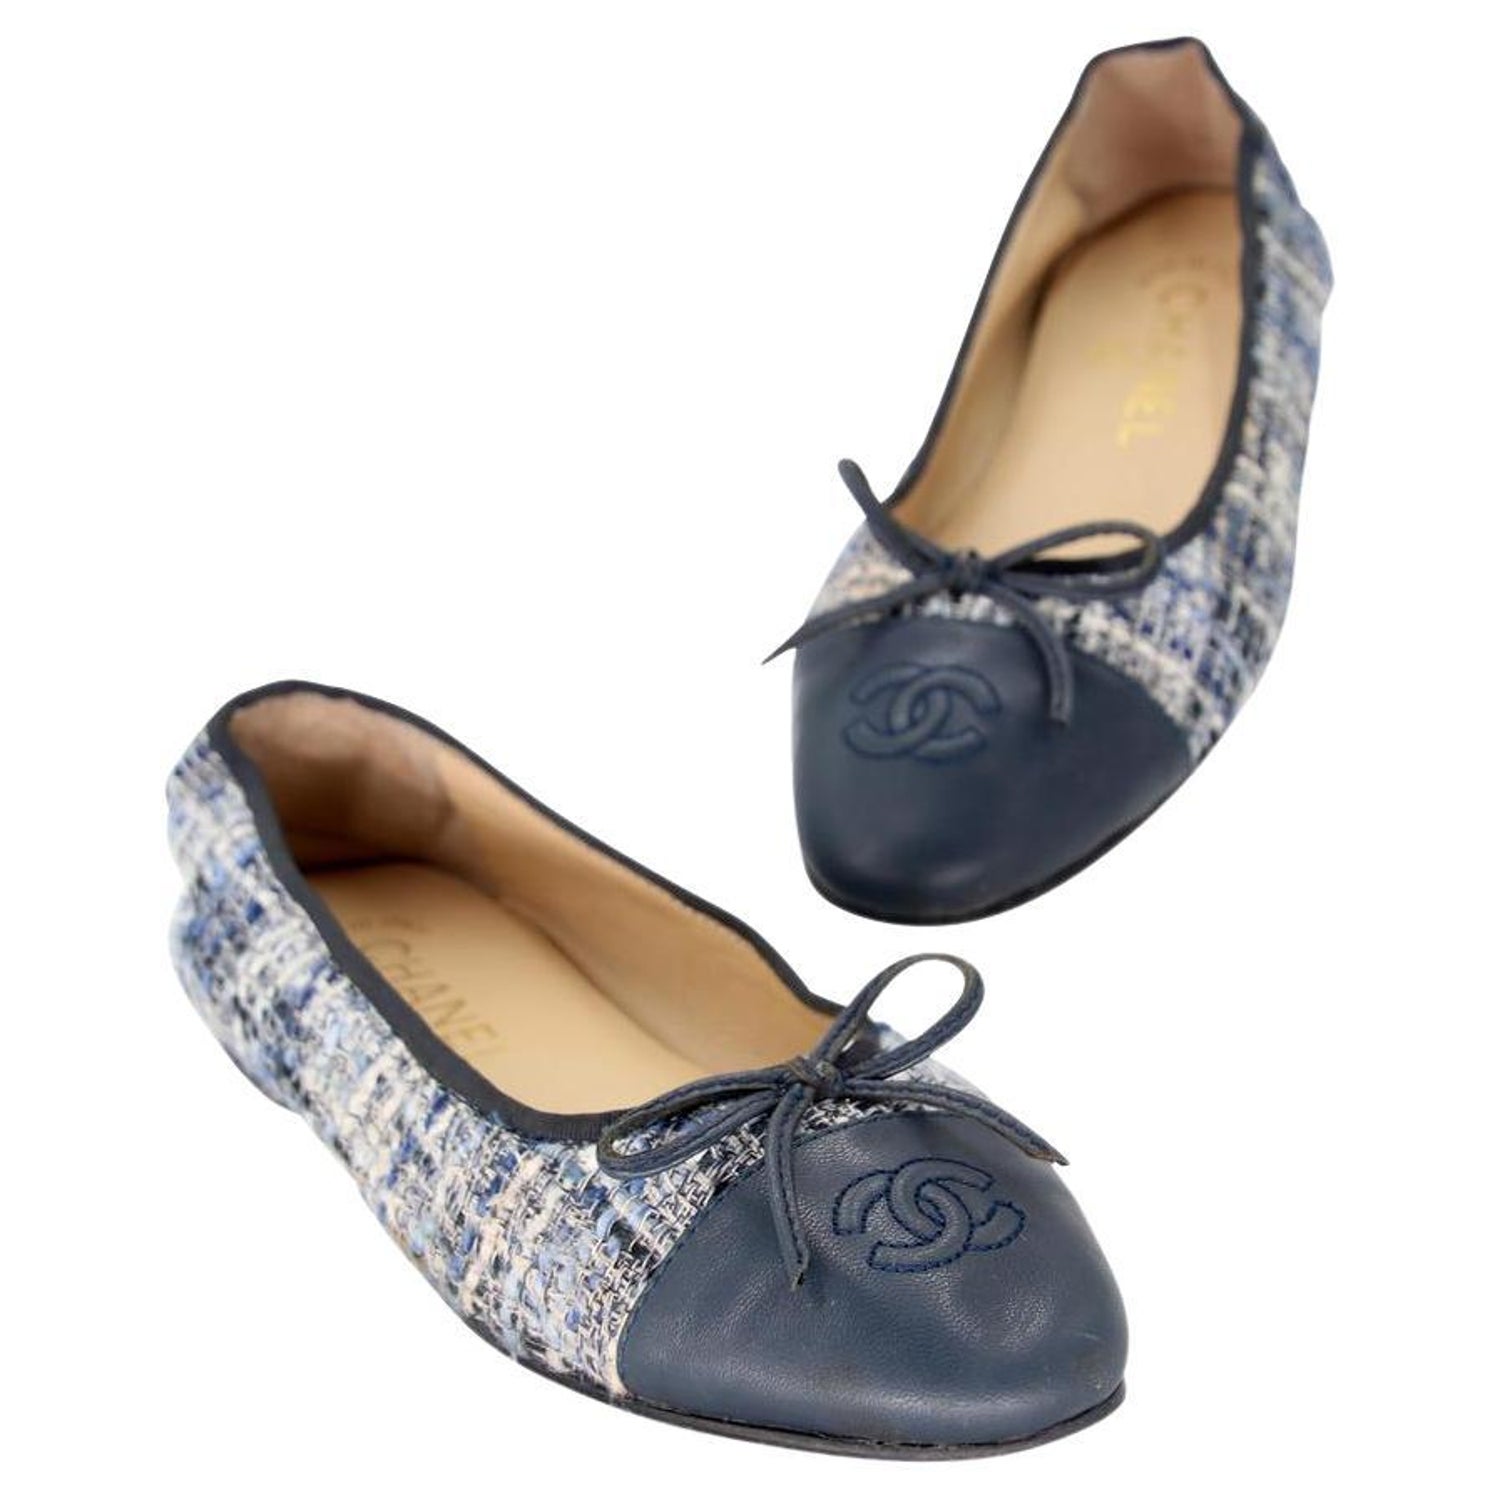 Chanel Shoe 37c - 5 For Sale on 1stDibs  37c shoe size, chanel denim shoes,  chanel denim ballet flats